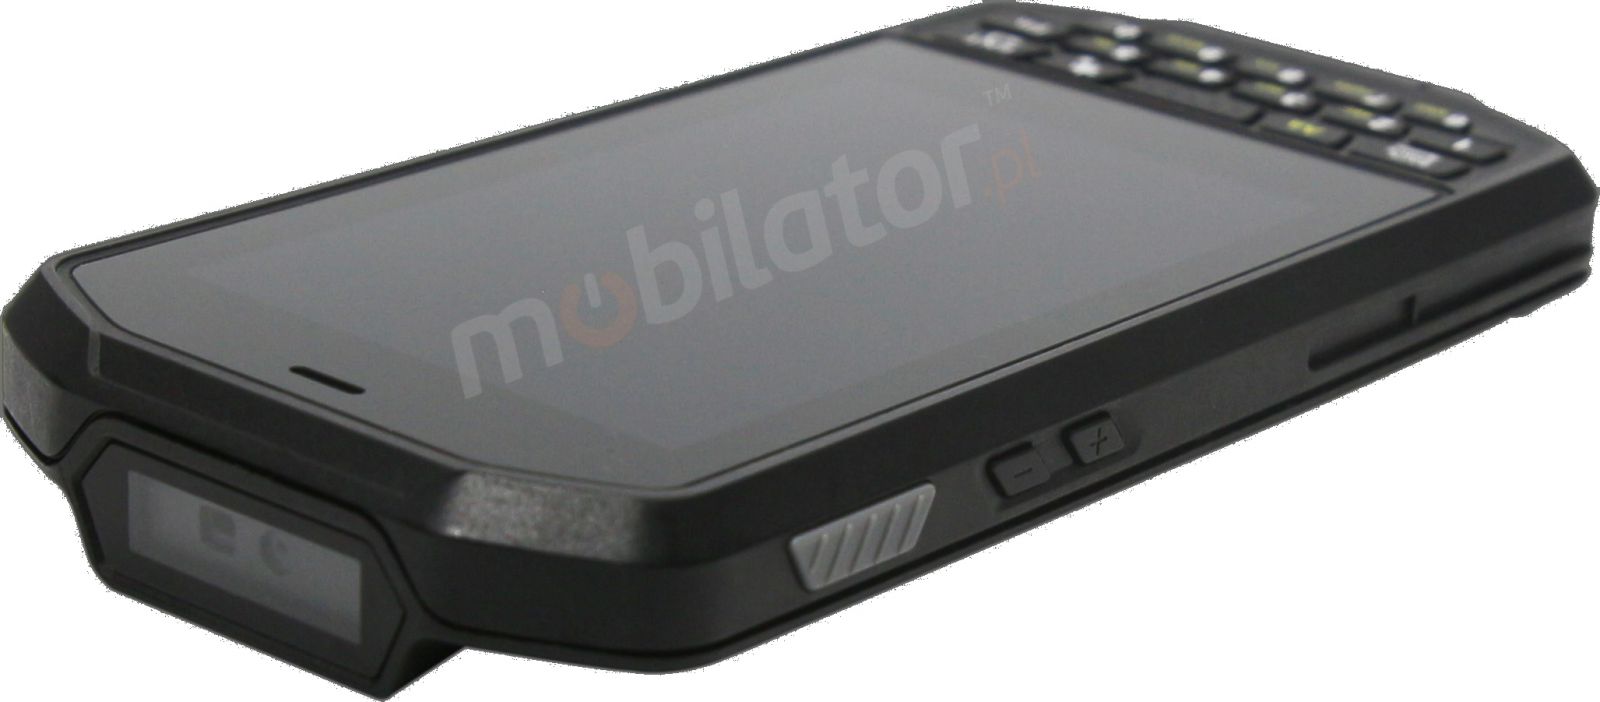 Mobipad Qxtron 4100 v.8 - Rugged (IP65 + MIL-STD-810G) data terminal with Android 9.0 OS, Honeywell 2D code reader, NFC, 4GB RAM, 64GB ROM + UHF radio reader 